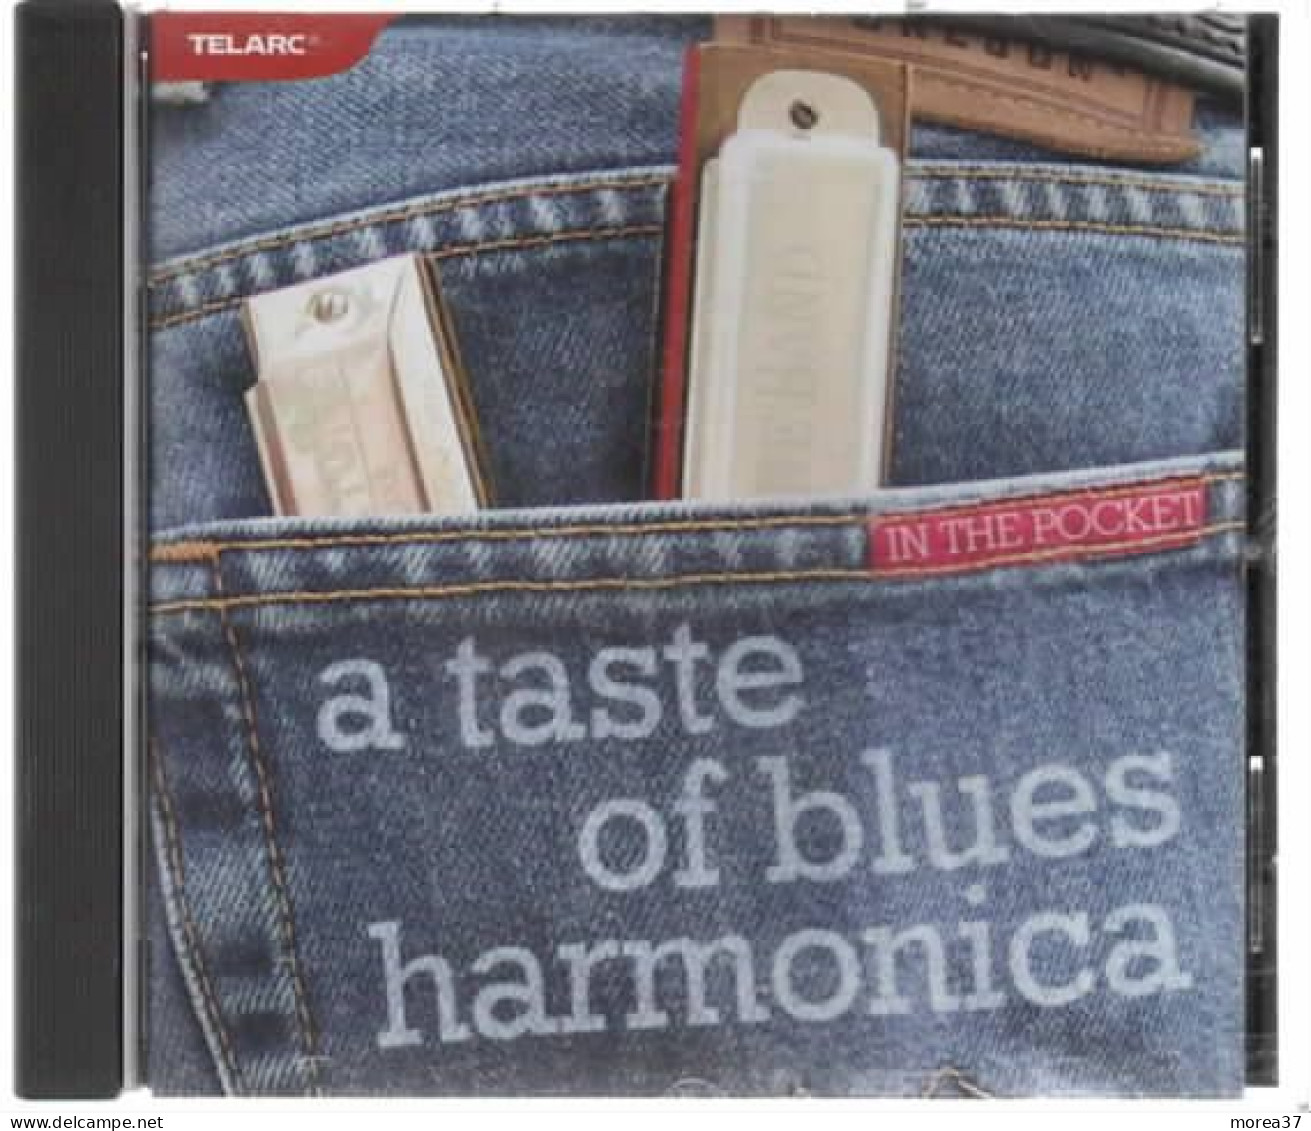 IN THE POCKET   A Taste Of Blues Harmonica - Sonstige - Englische Musik